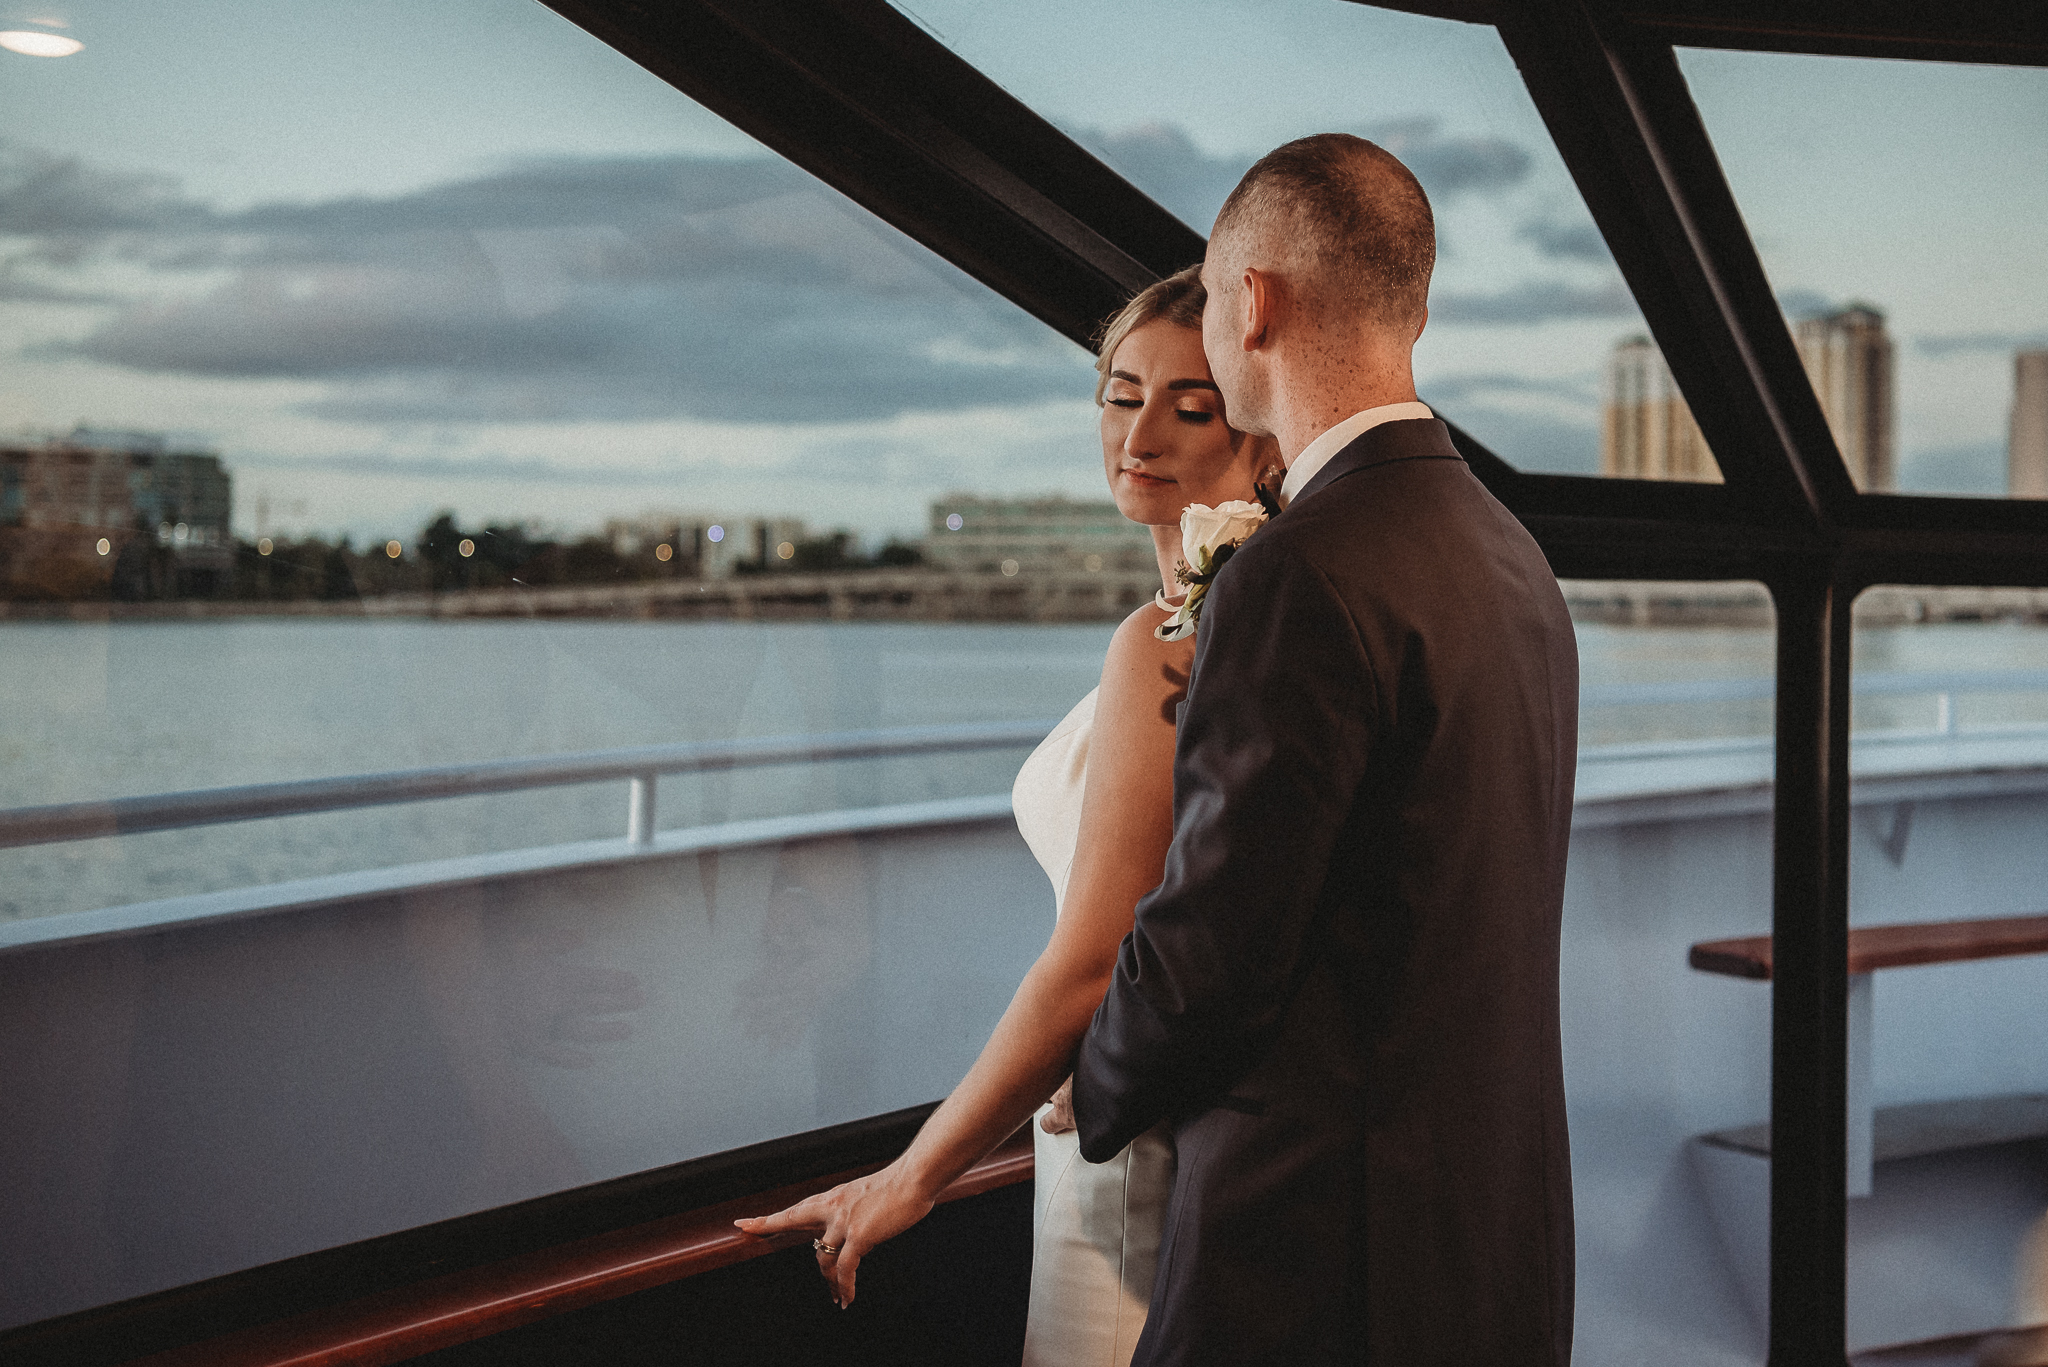 Yacht StarShip Tampa Wedding, Caleo Photography